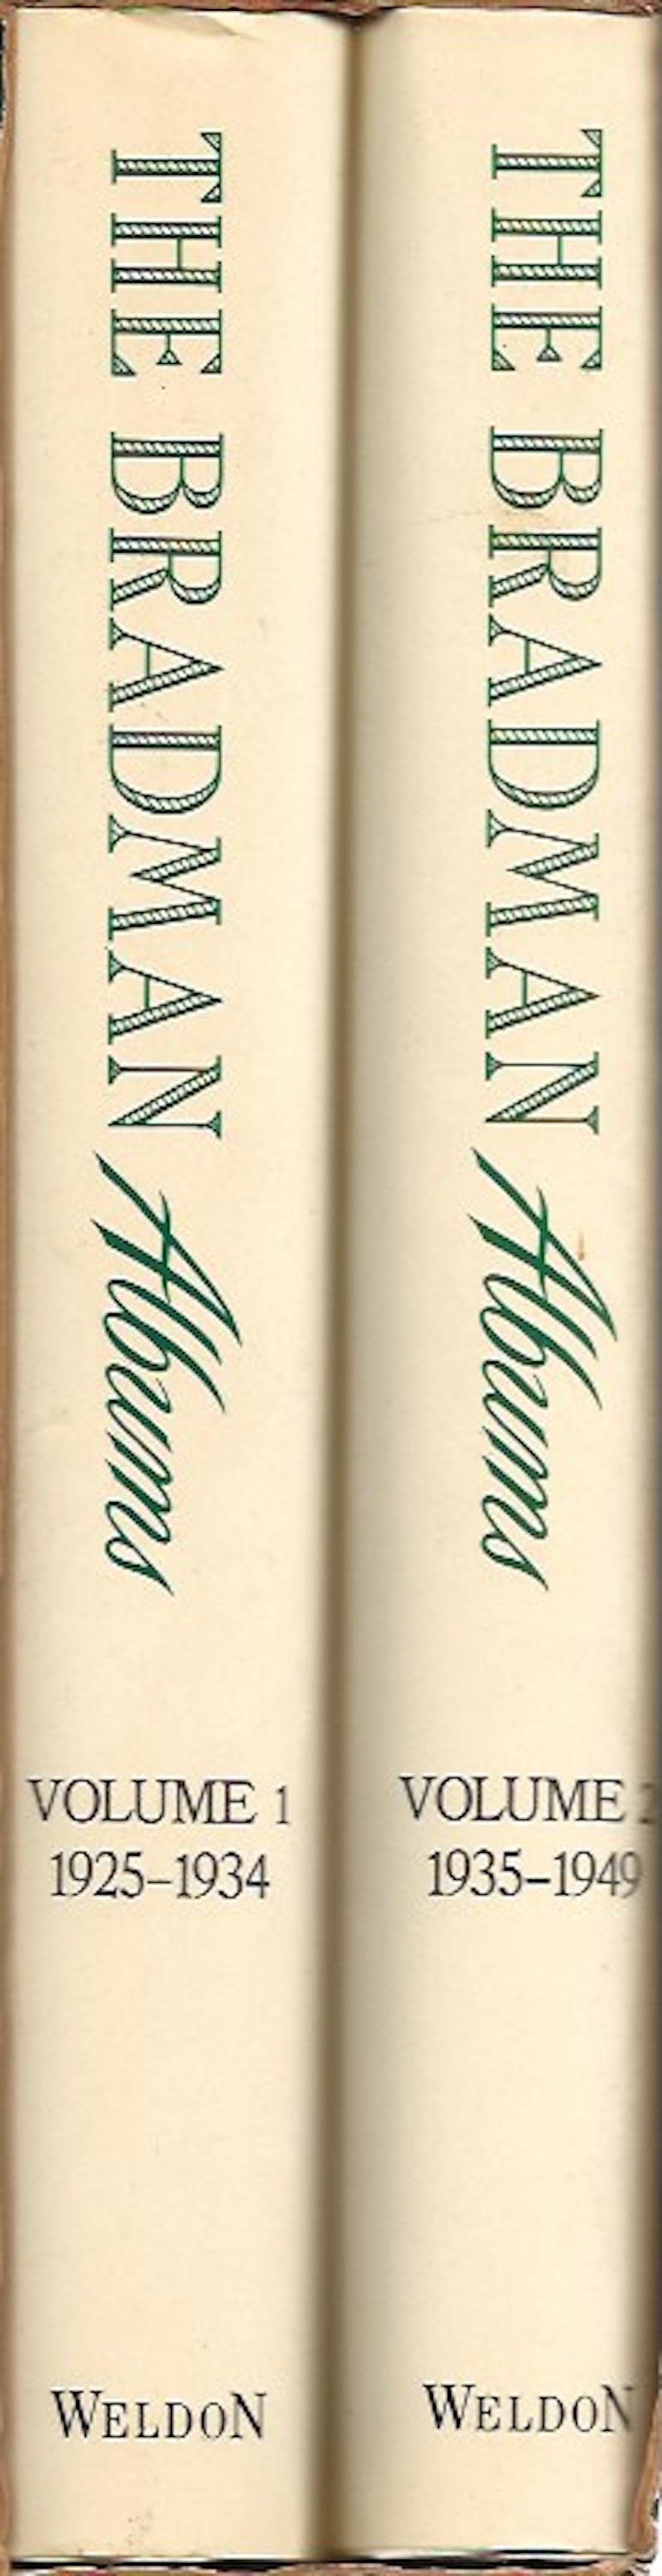 The Bradman Albums by Angel, J. and B.H. Fletcher